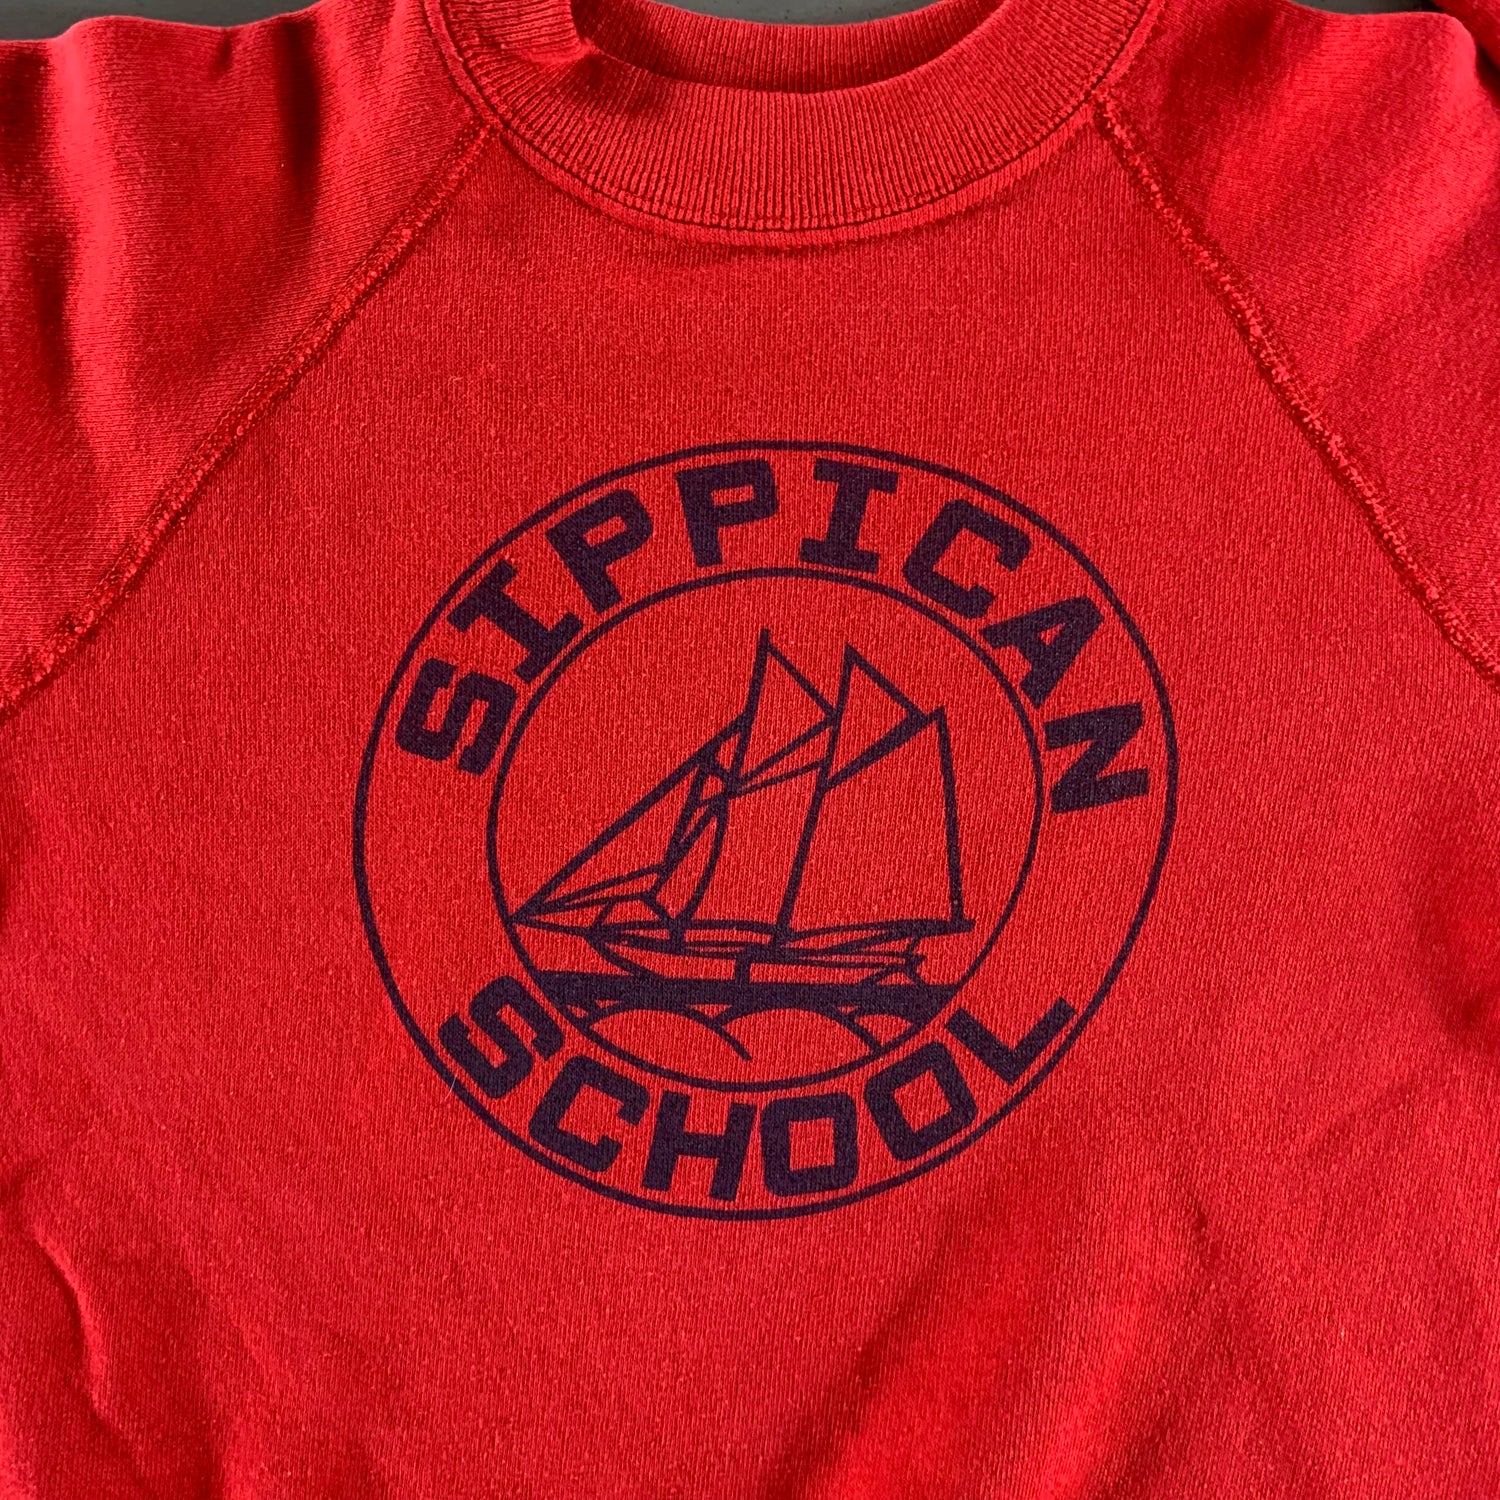 Vintage 1980s Sippican School Sweatshirt size Medium